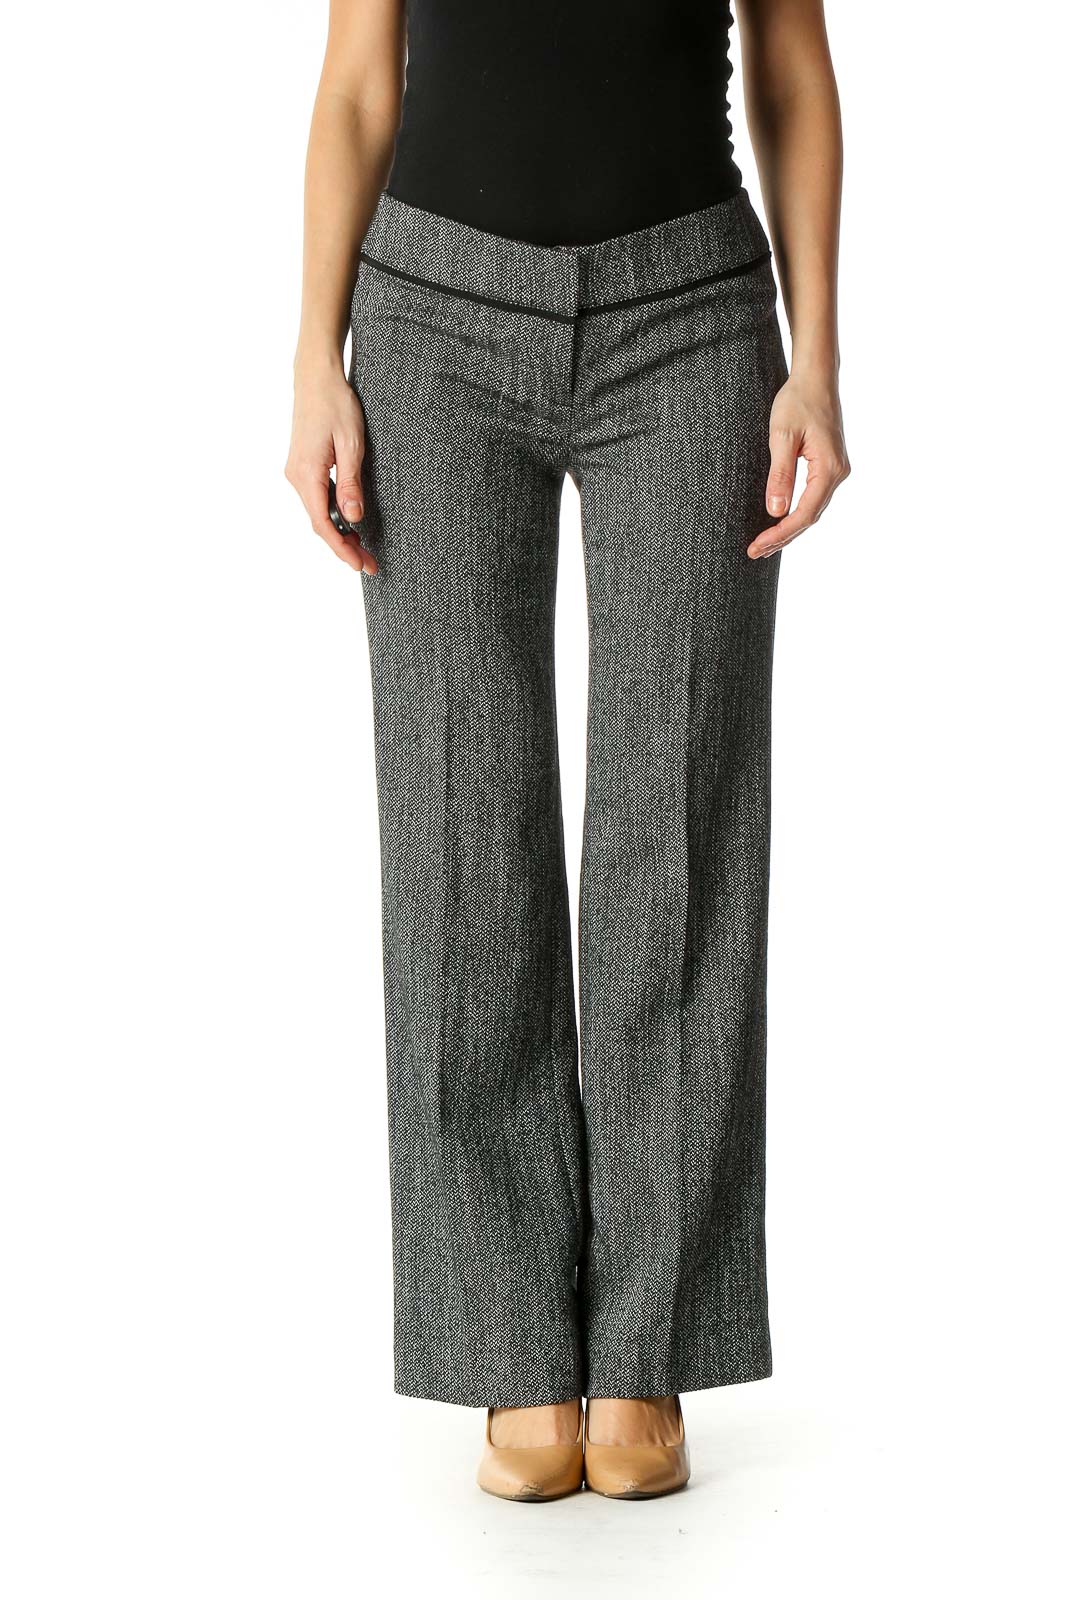 Gray Print Bohemian Trousers Front